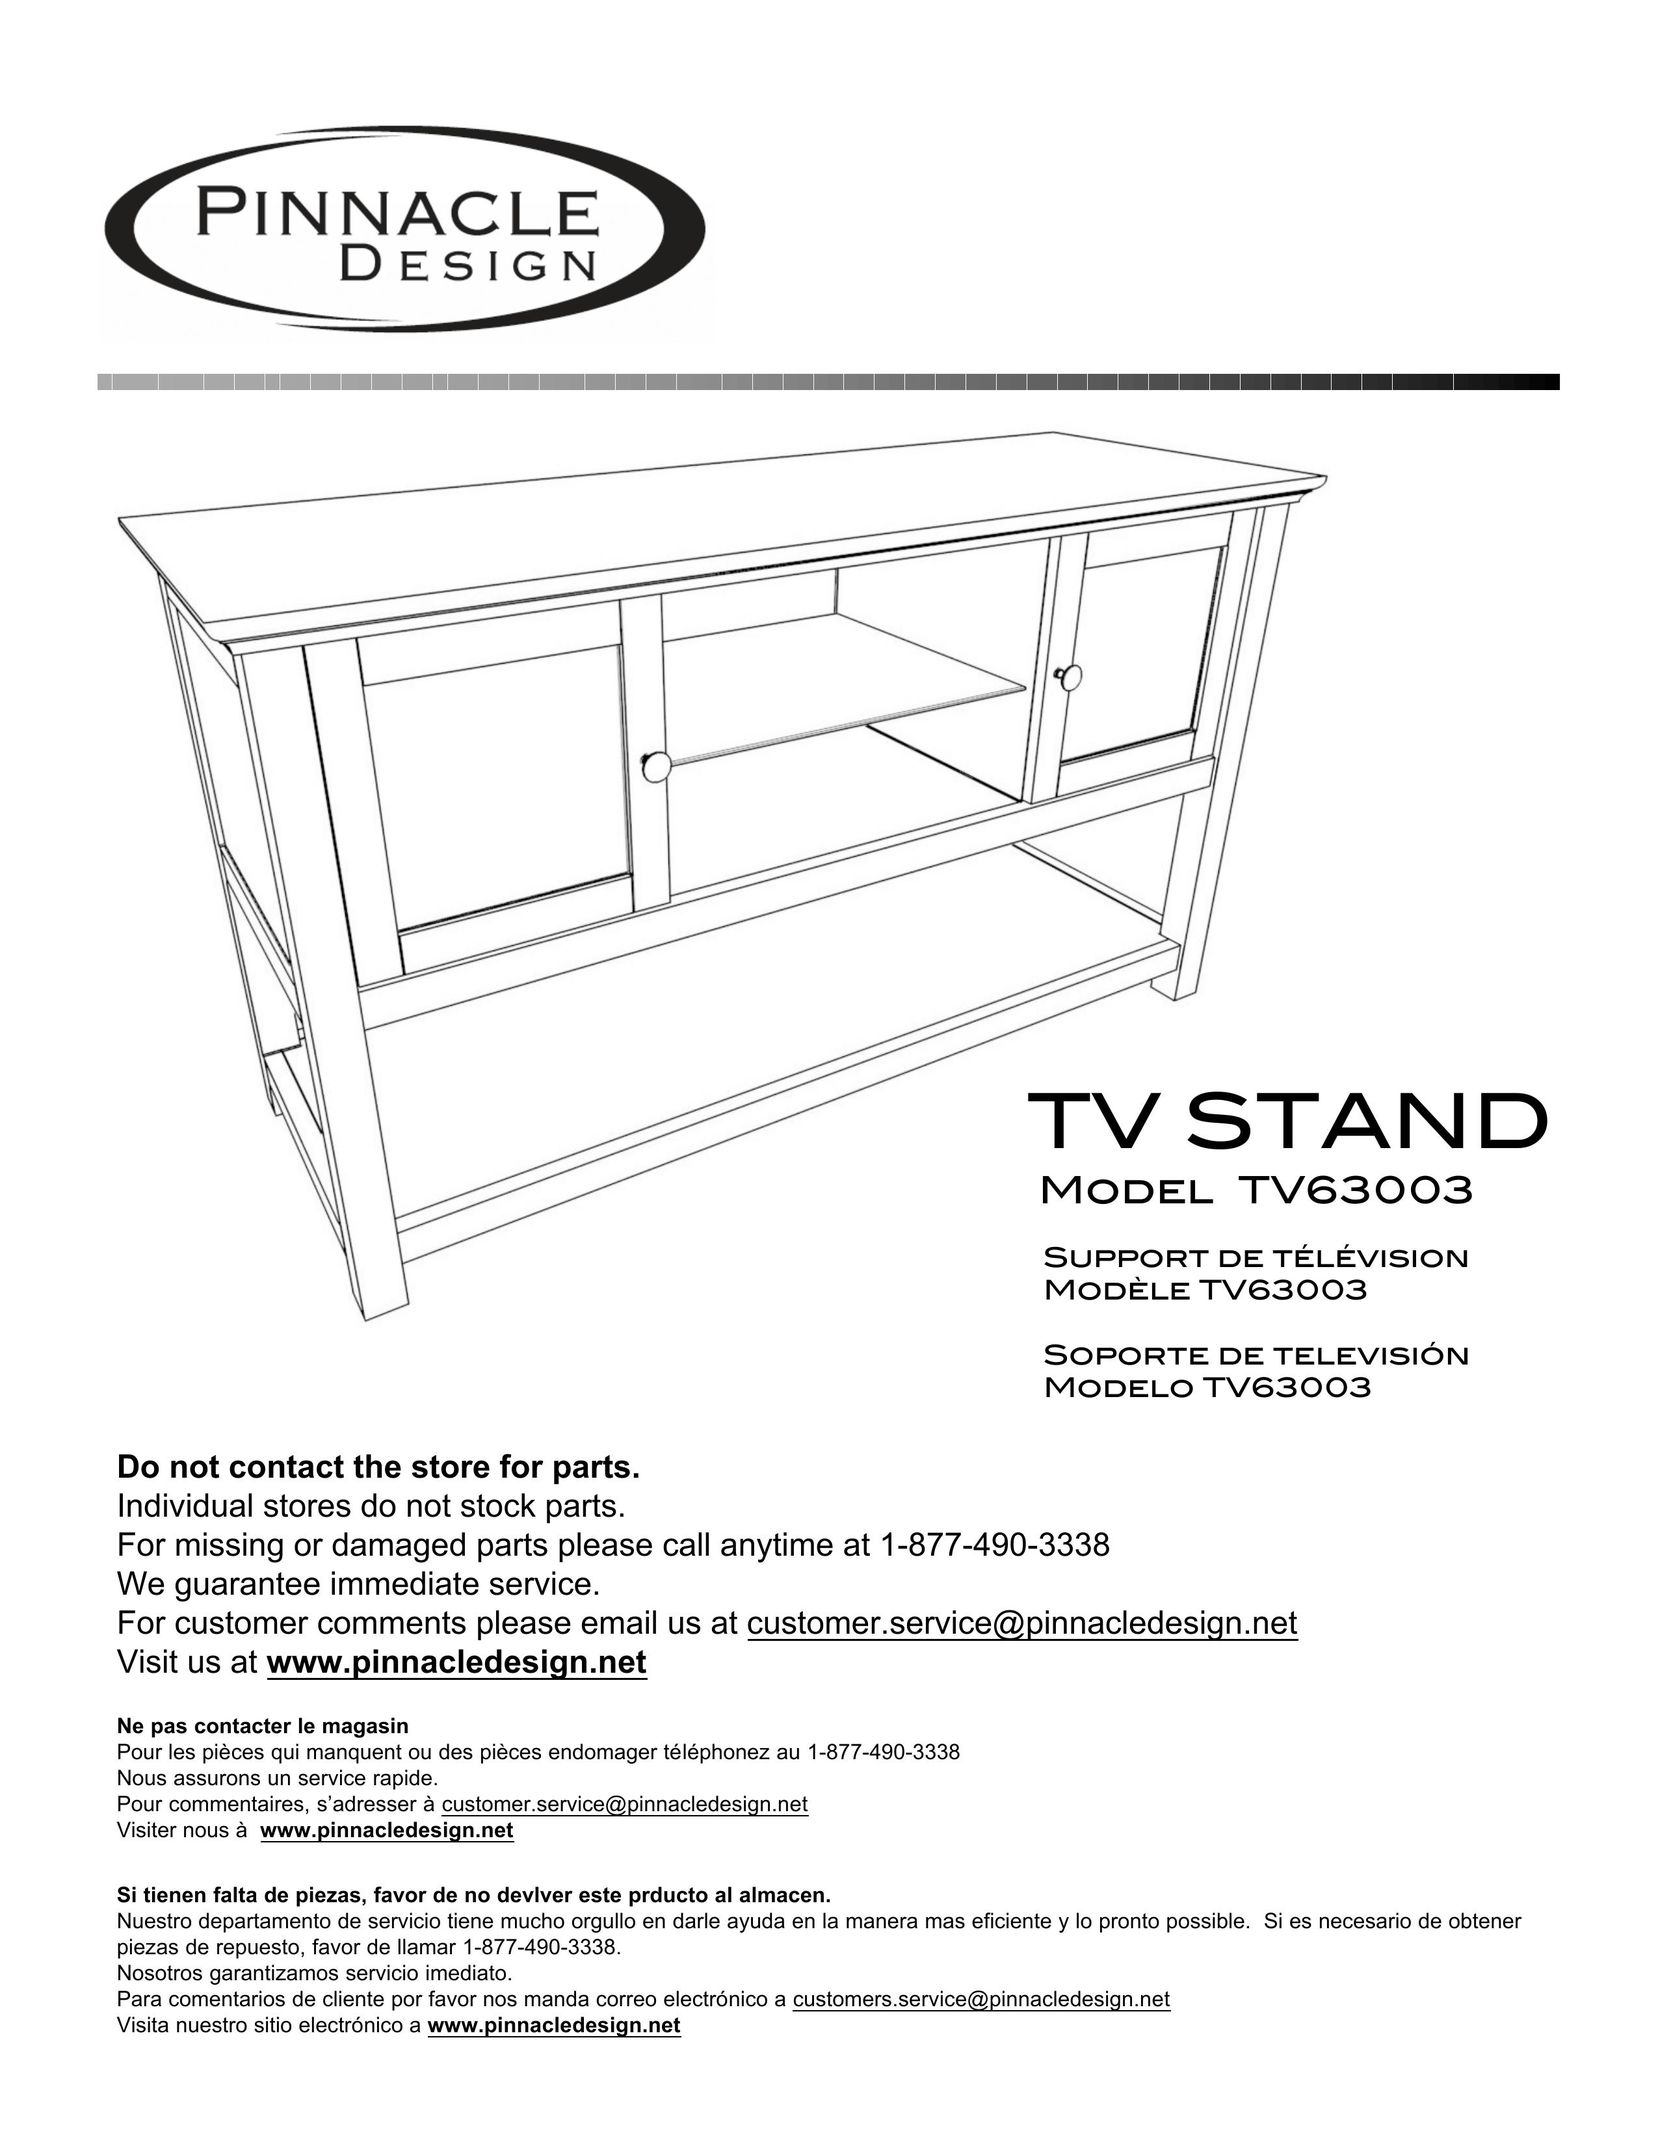 Pinnacle Design TV63003 TV Video Accessories User Manual